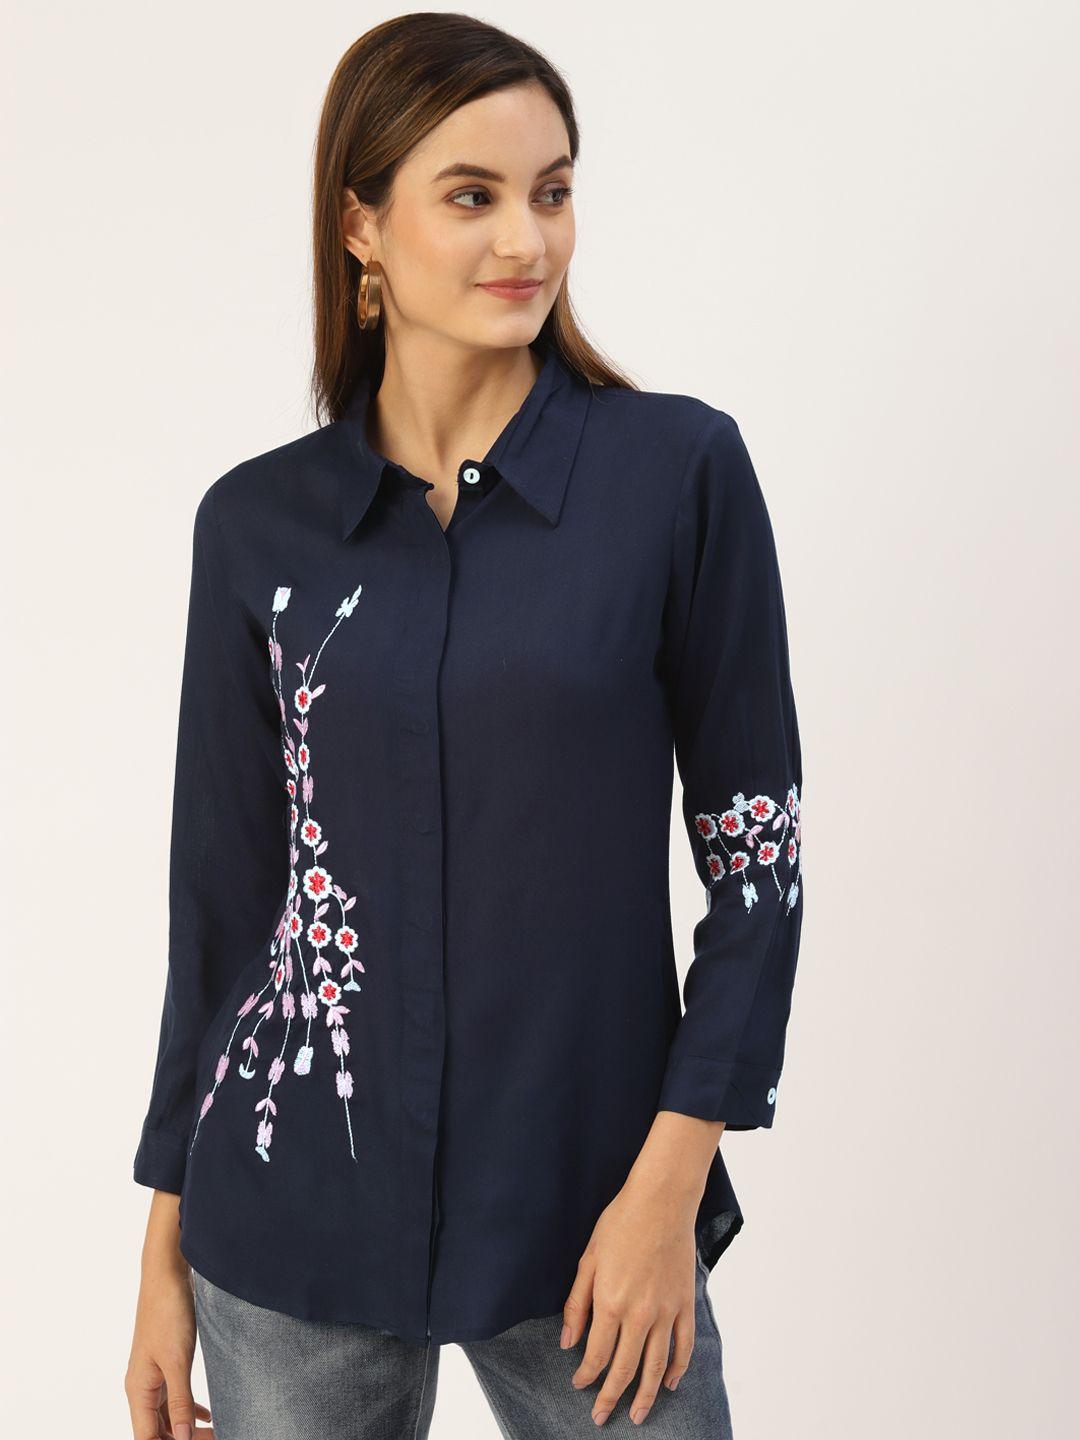 kbz navy blue & white floral print shirt style top